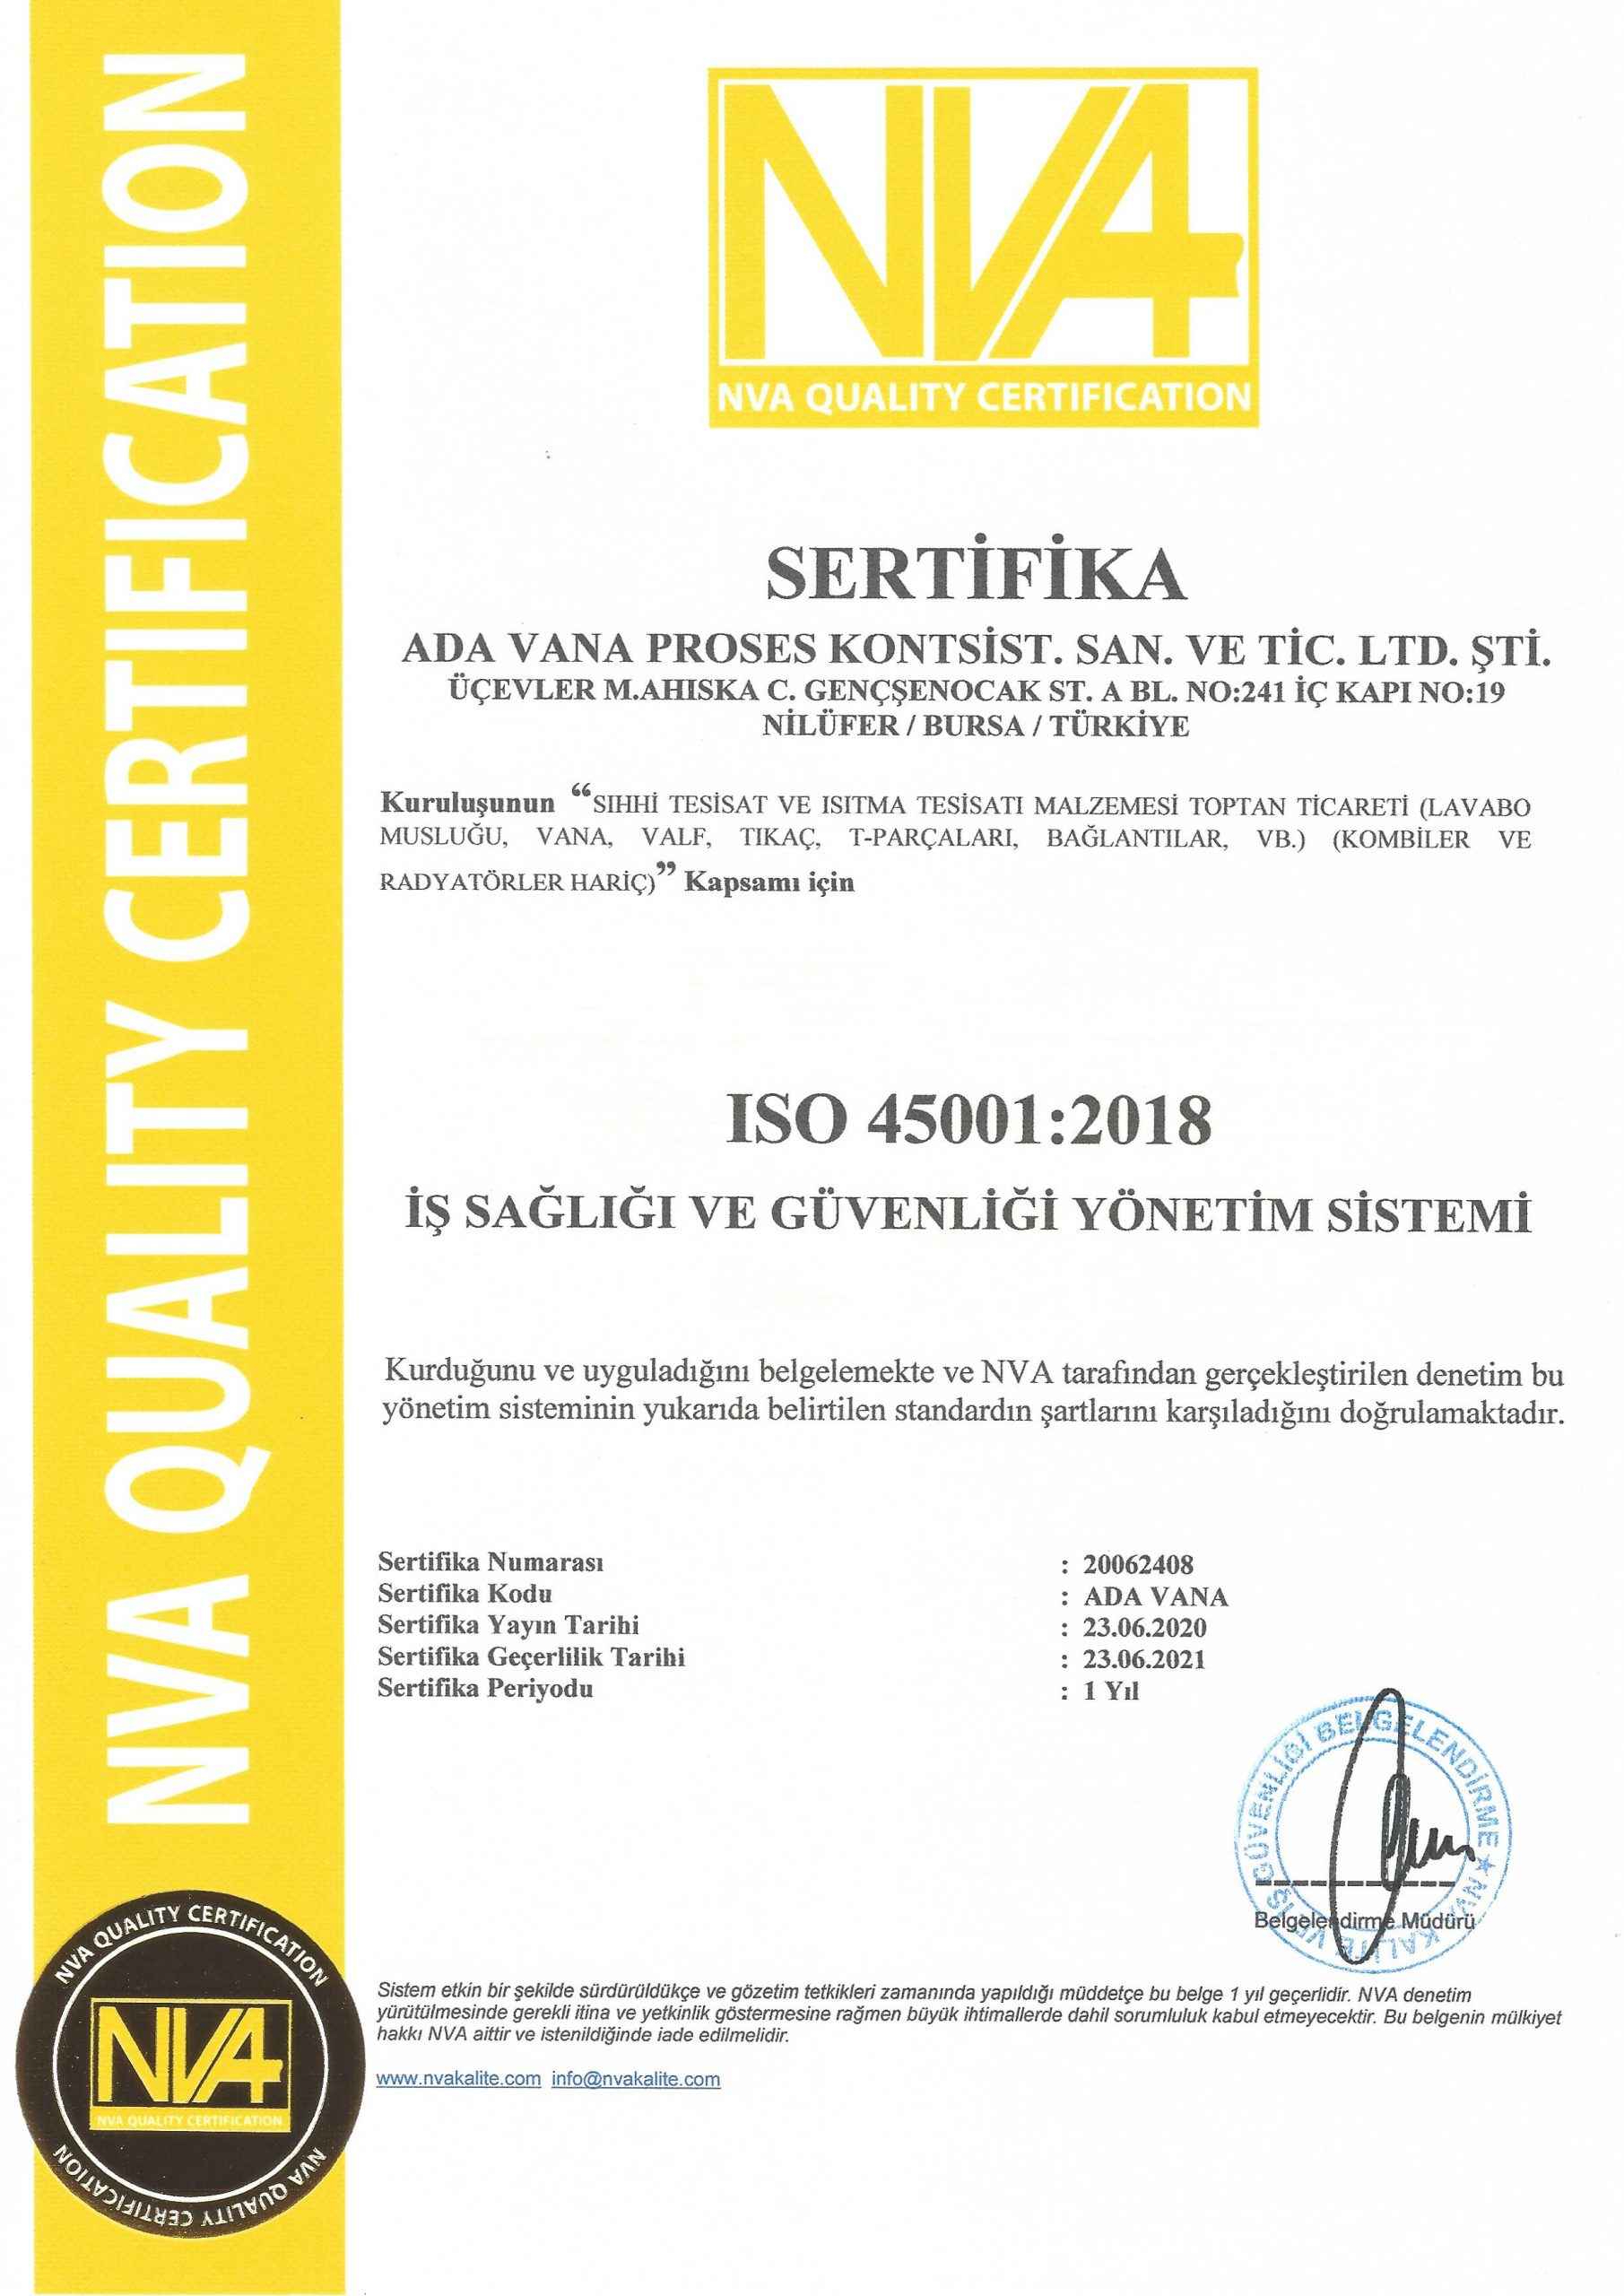 ada vana kalite sertifikası